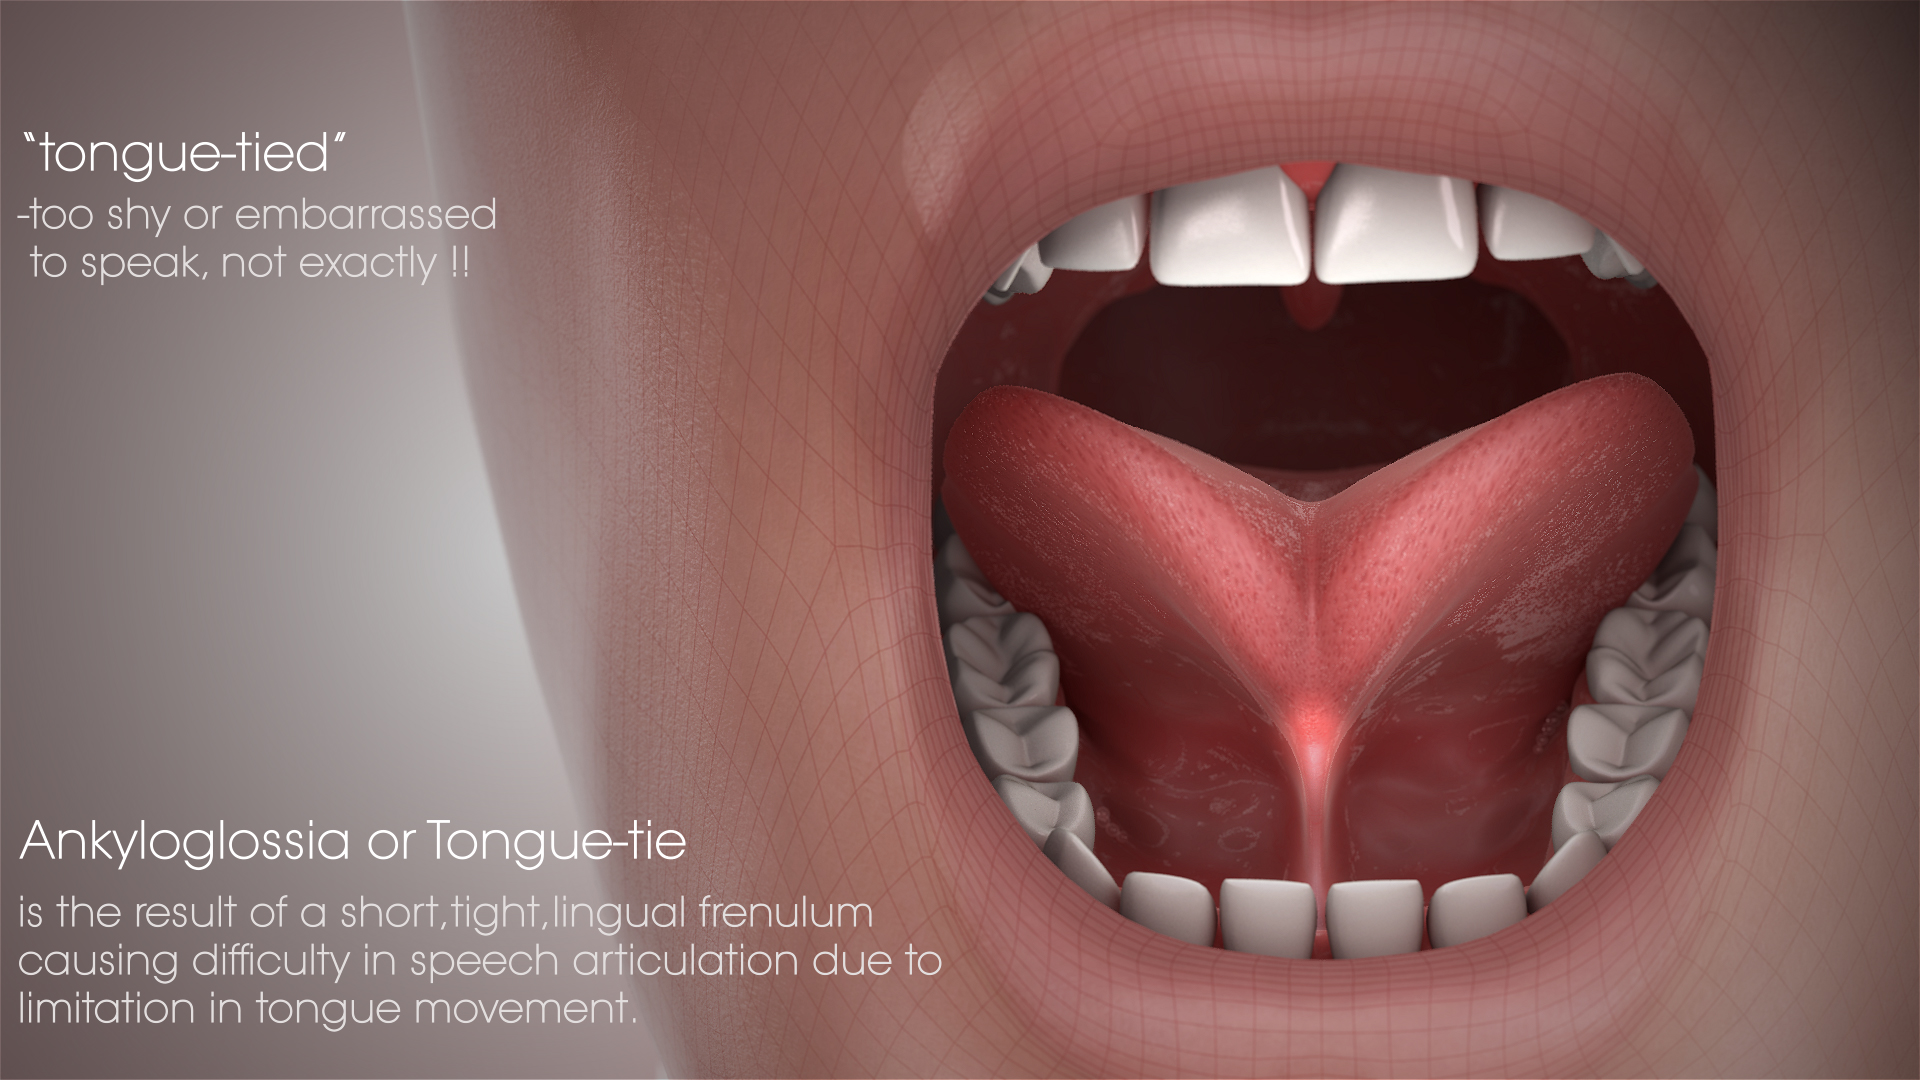 Medical Animation Still Shot Explaining Tongue-tie